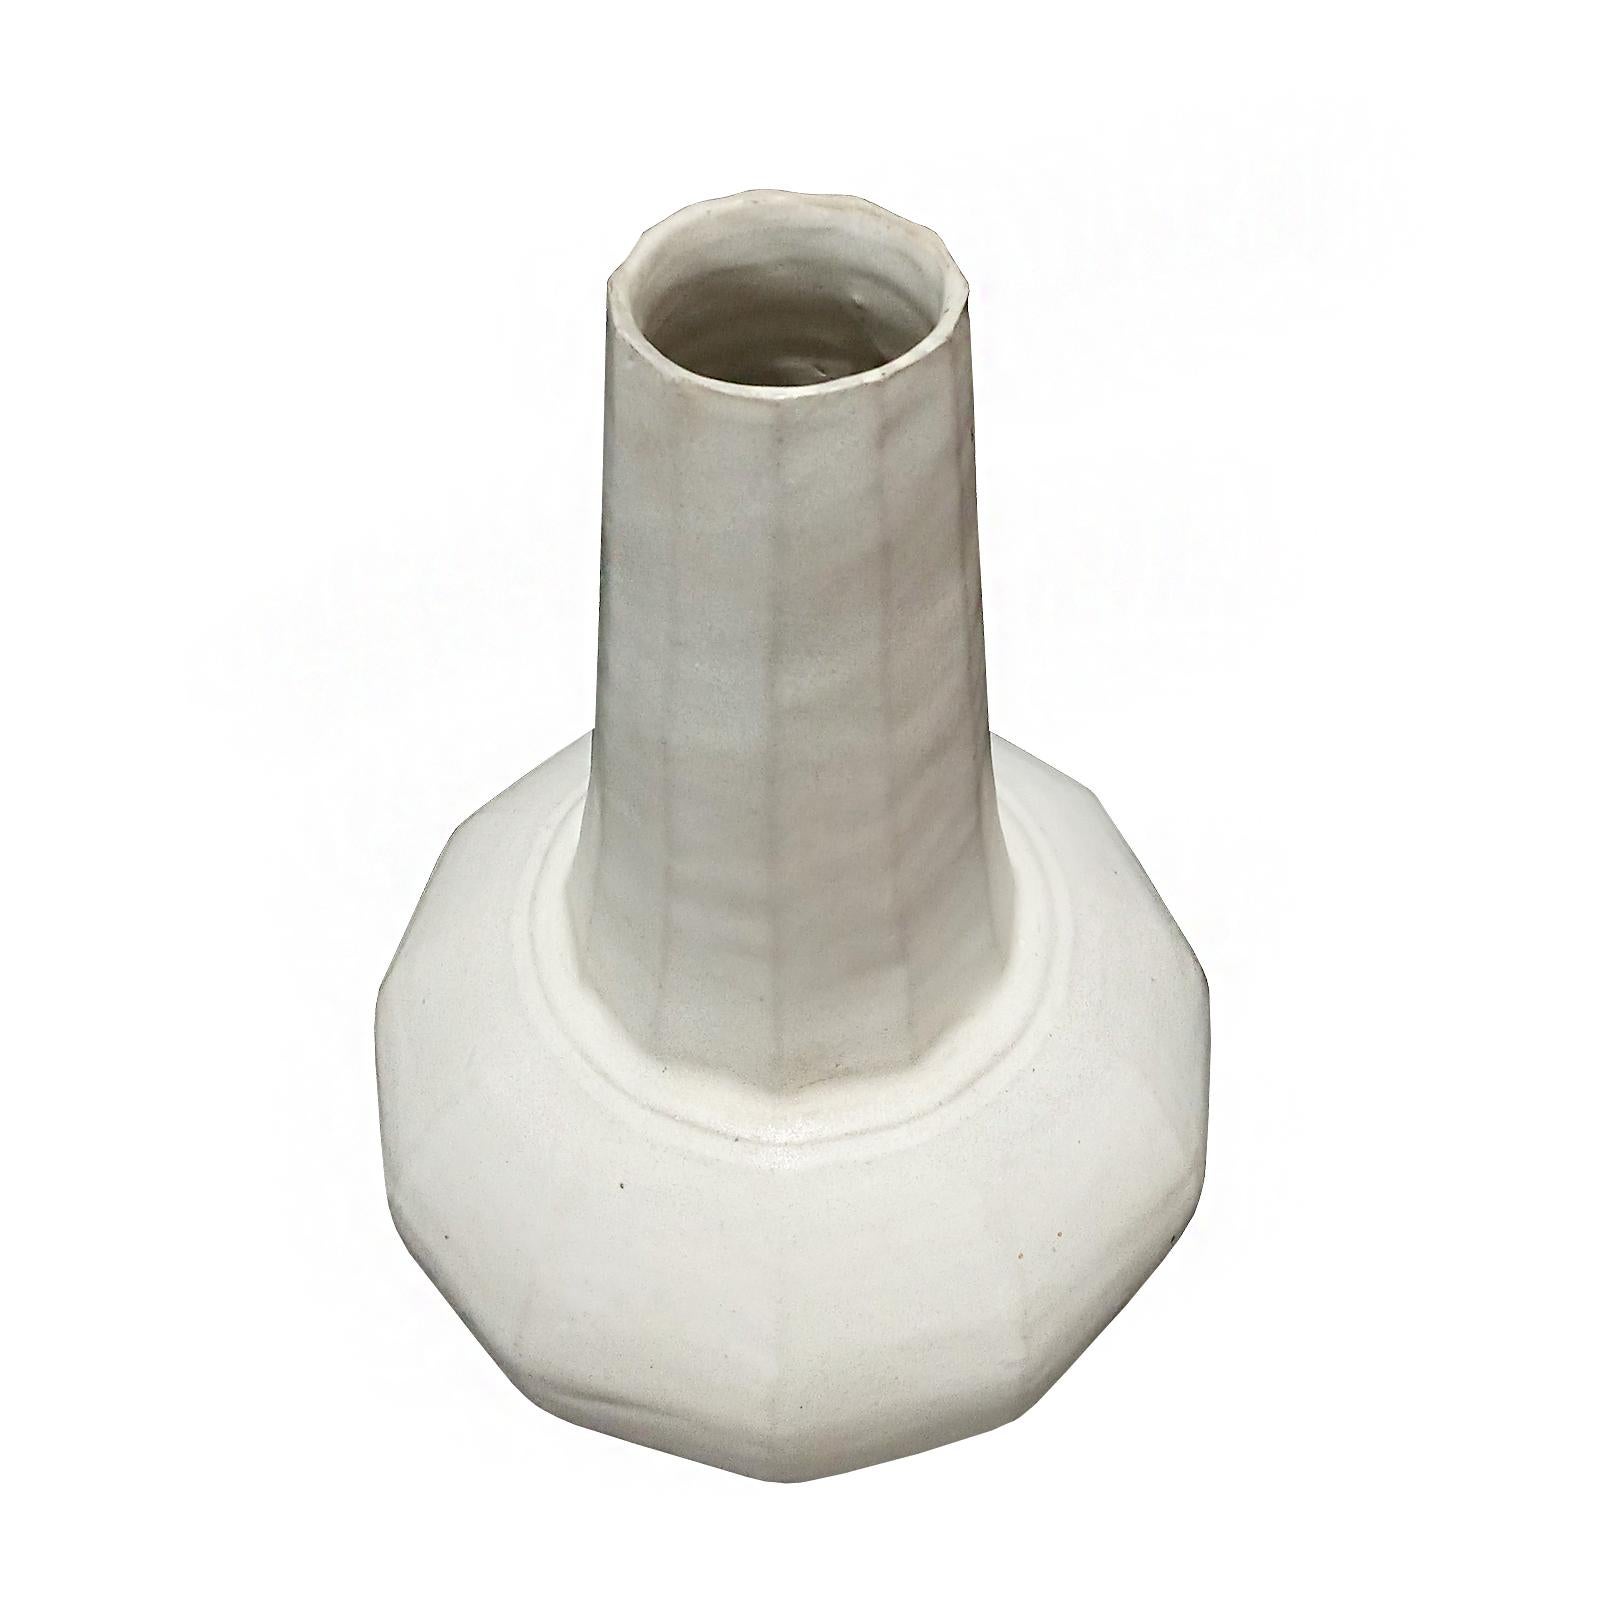 Earthenware Thai Ceramic Vase with White Glaze, Contemporary For Sale